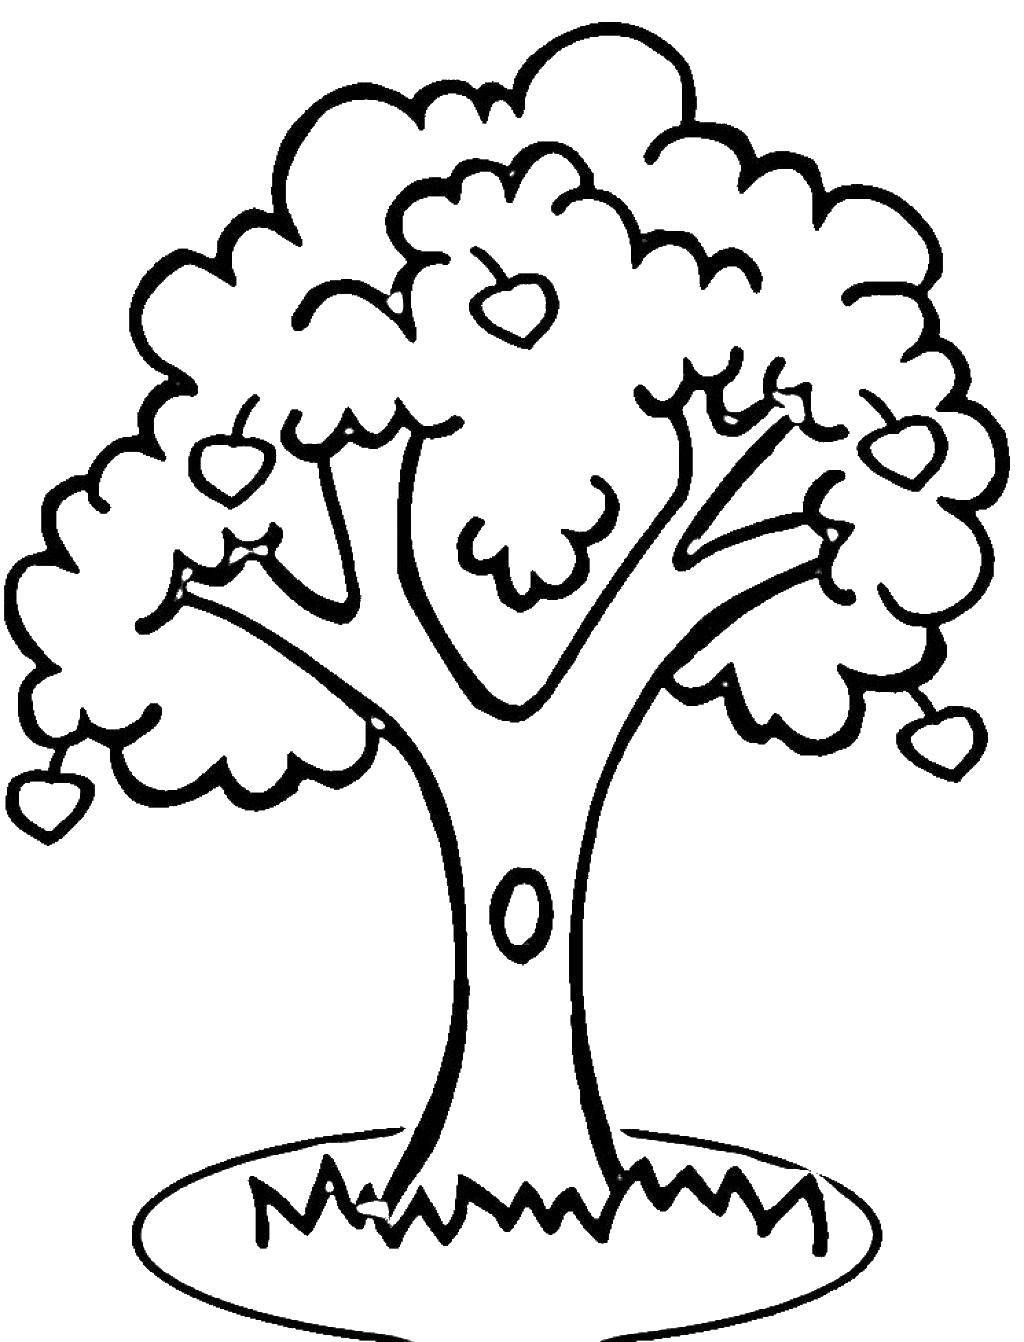 Название: Раскраска Дерево с дуплом. Категория: Контур дерева. Теги: дерево.